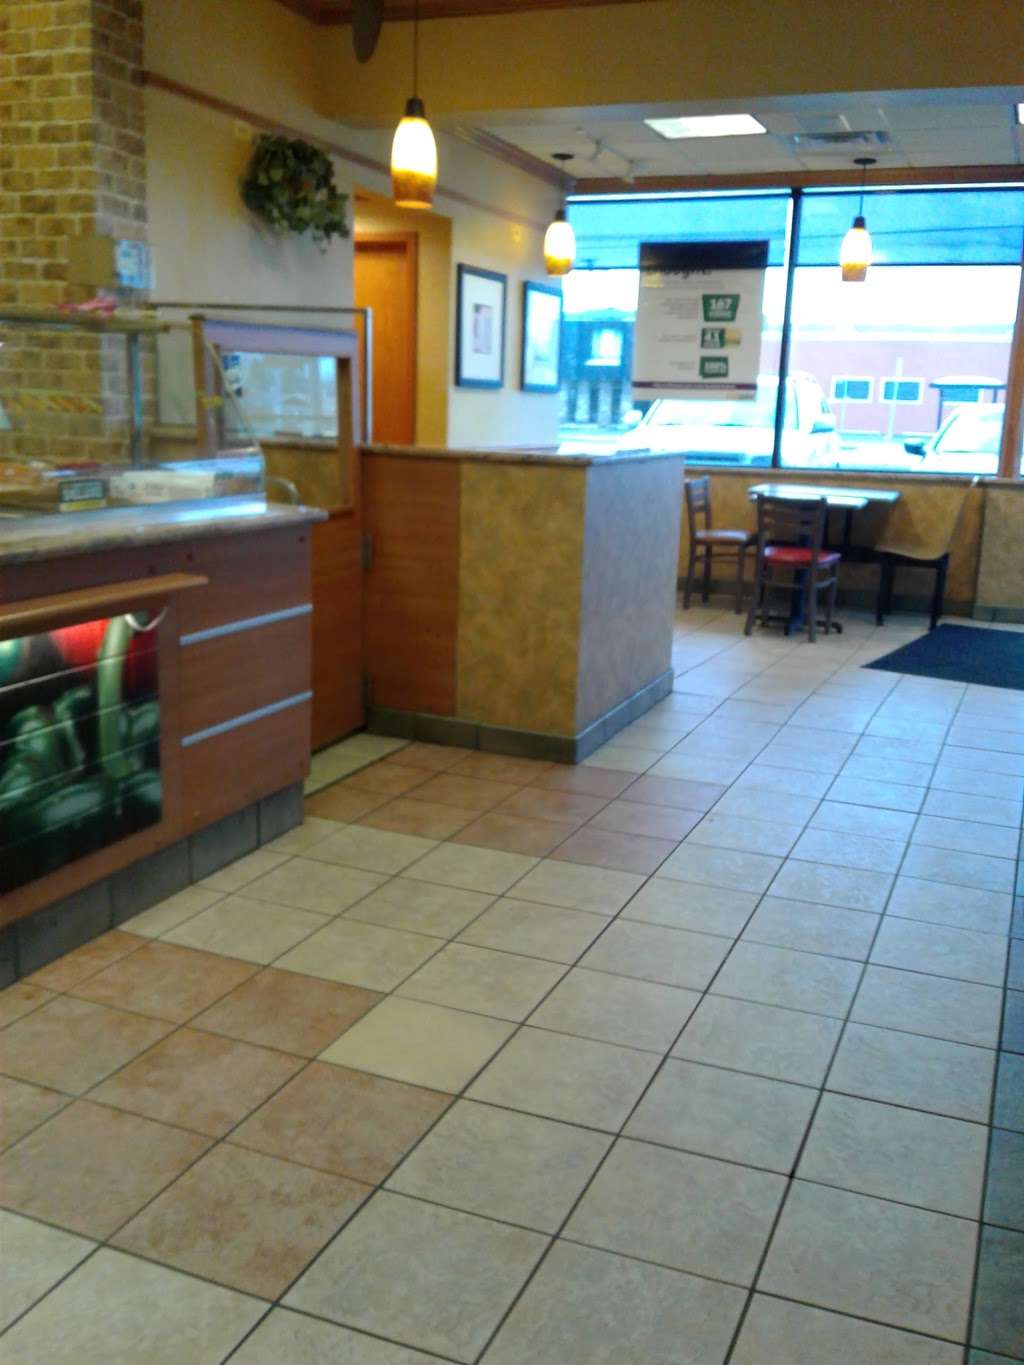 Subway Restaurants | 7901 S Narragansett Ave, Burbank, IL 60459, USA | Phone: (708) 599-2260